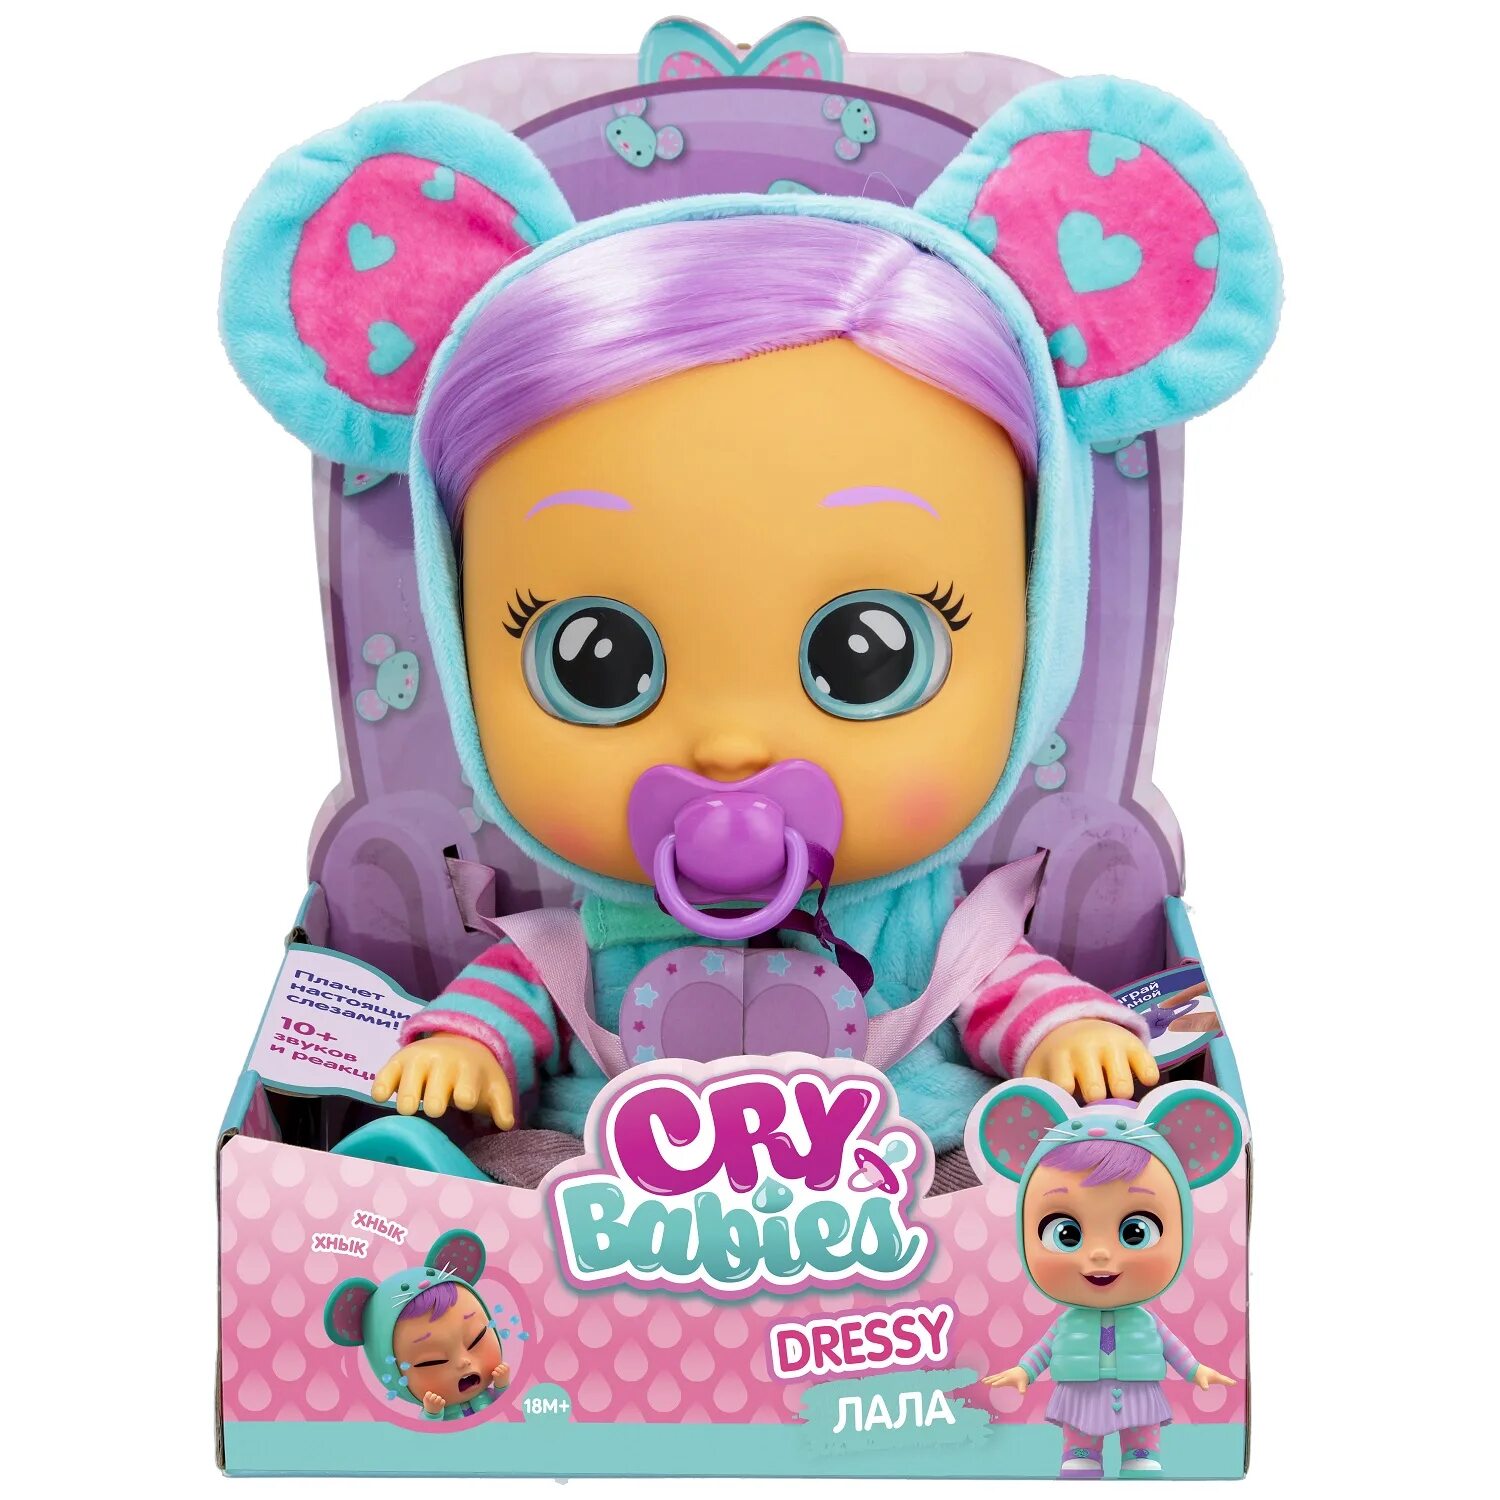 Crying babies куклы купить. Кукла Cry Babies Lala. Кукла IMC Toys Cry Babies Lala. Кукла интерактивная плачущая «Лала Dressy», край Бебис,. Кукла интерактивная Cry Babies "леди малышка".